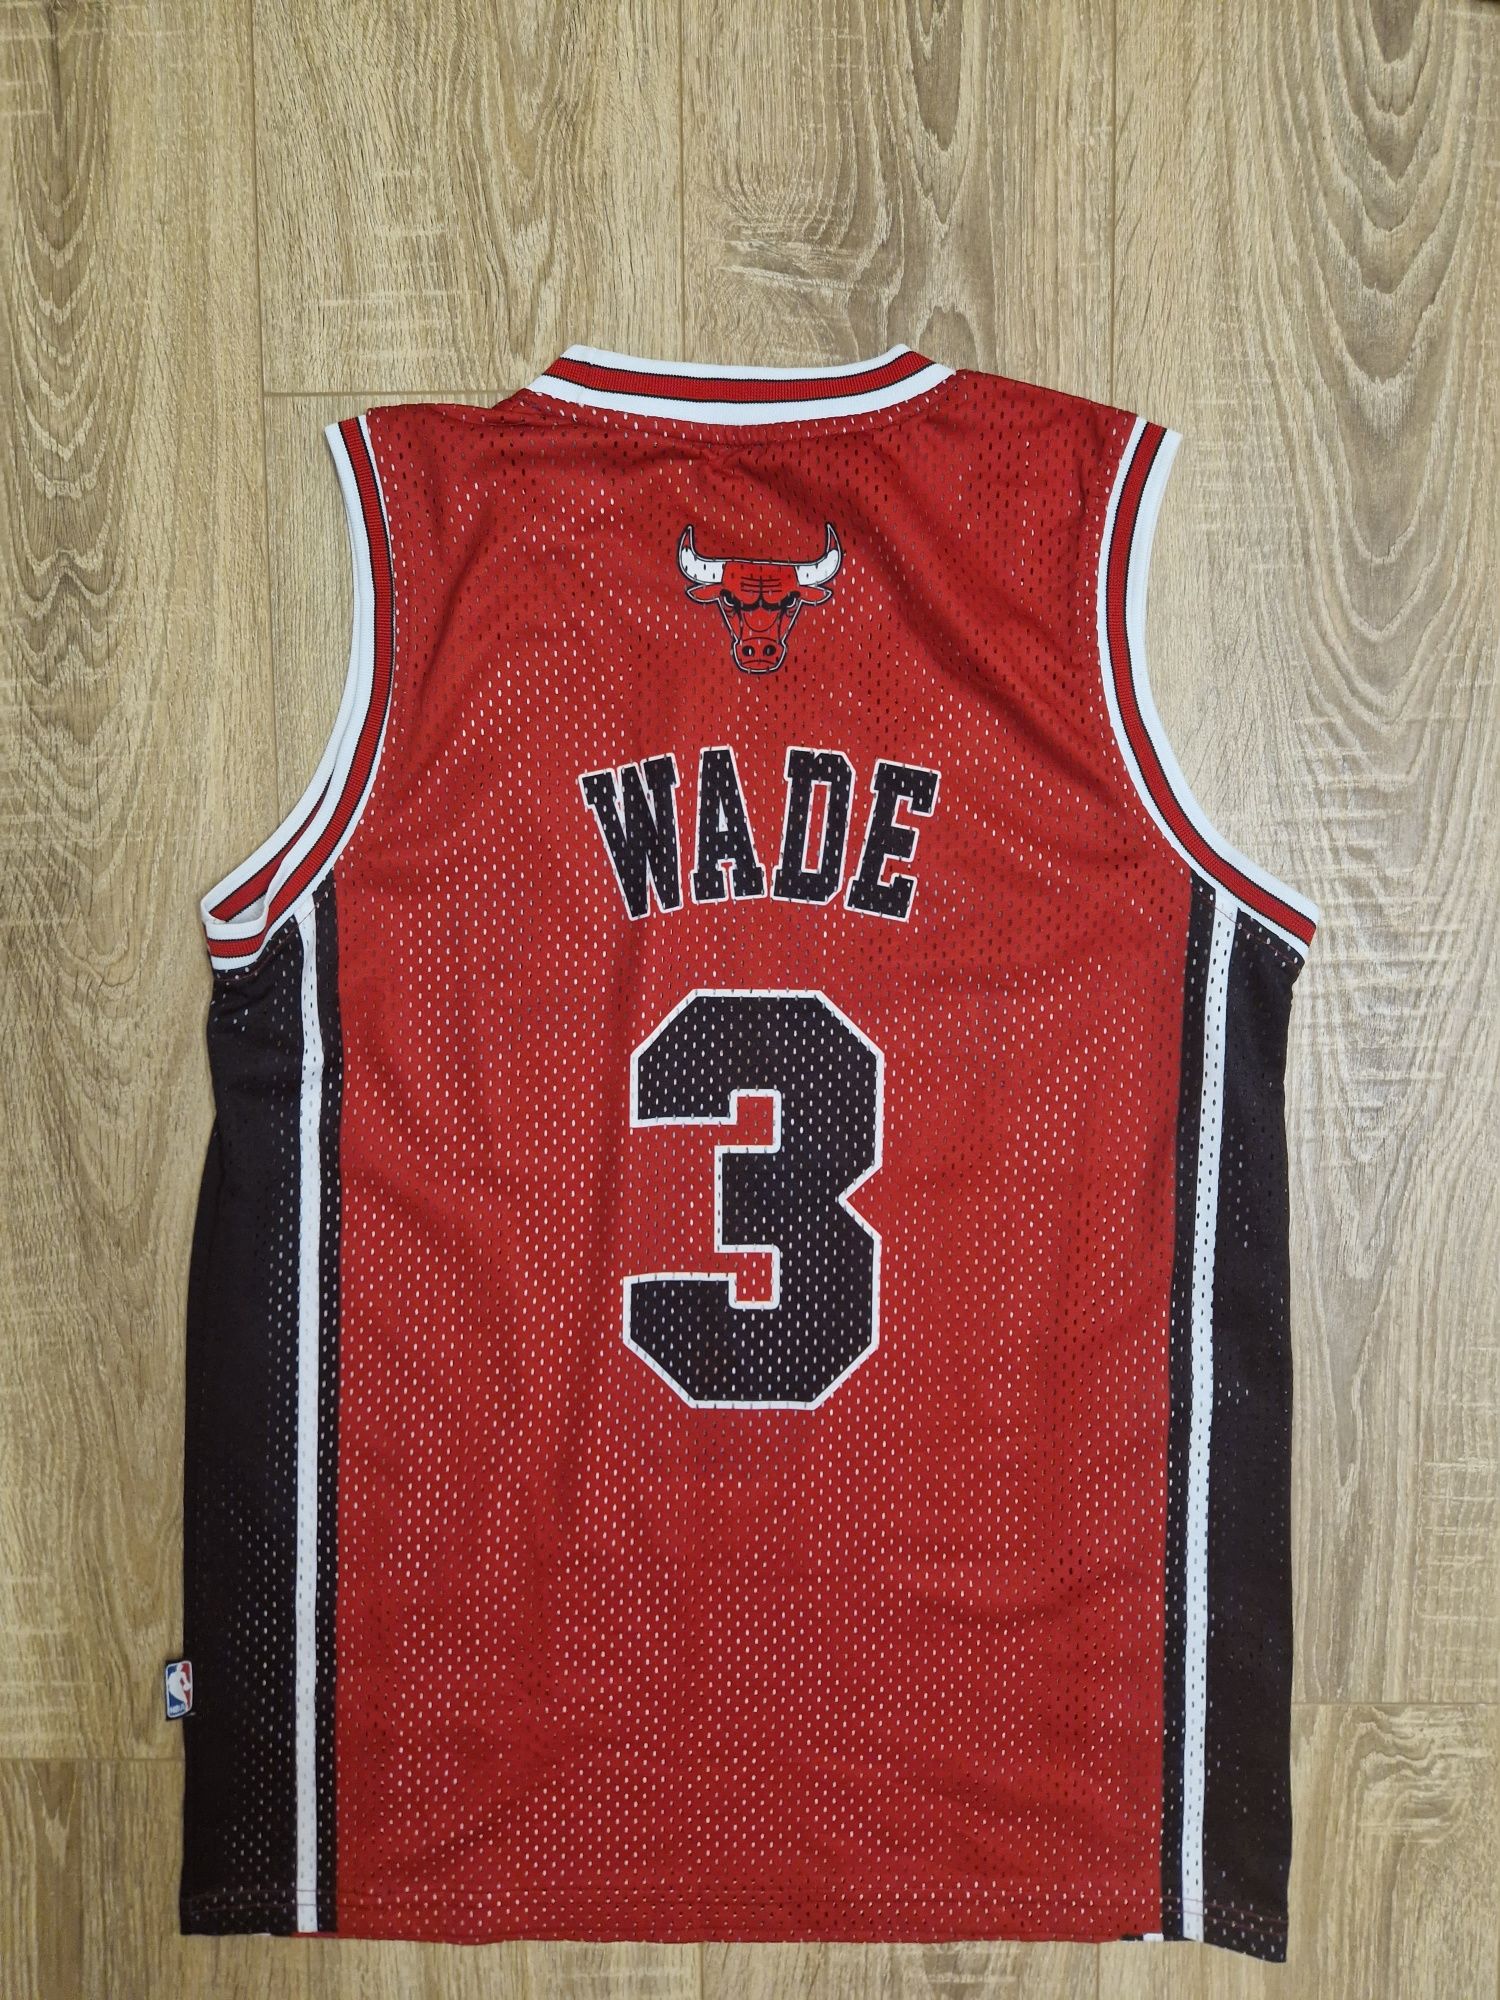 Chicago Bulls Dwayne Wade jersey